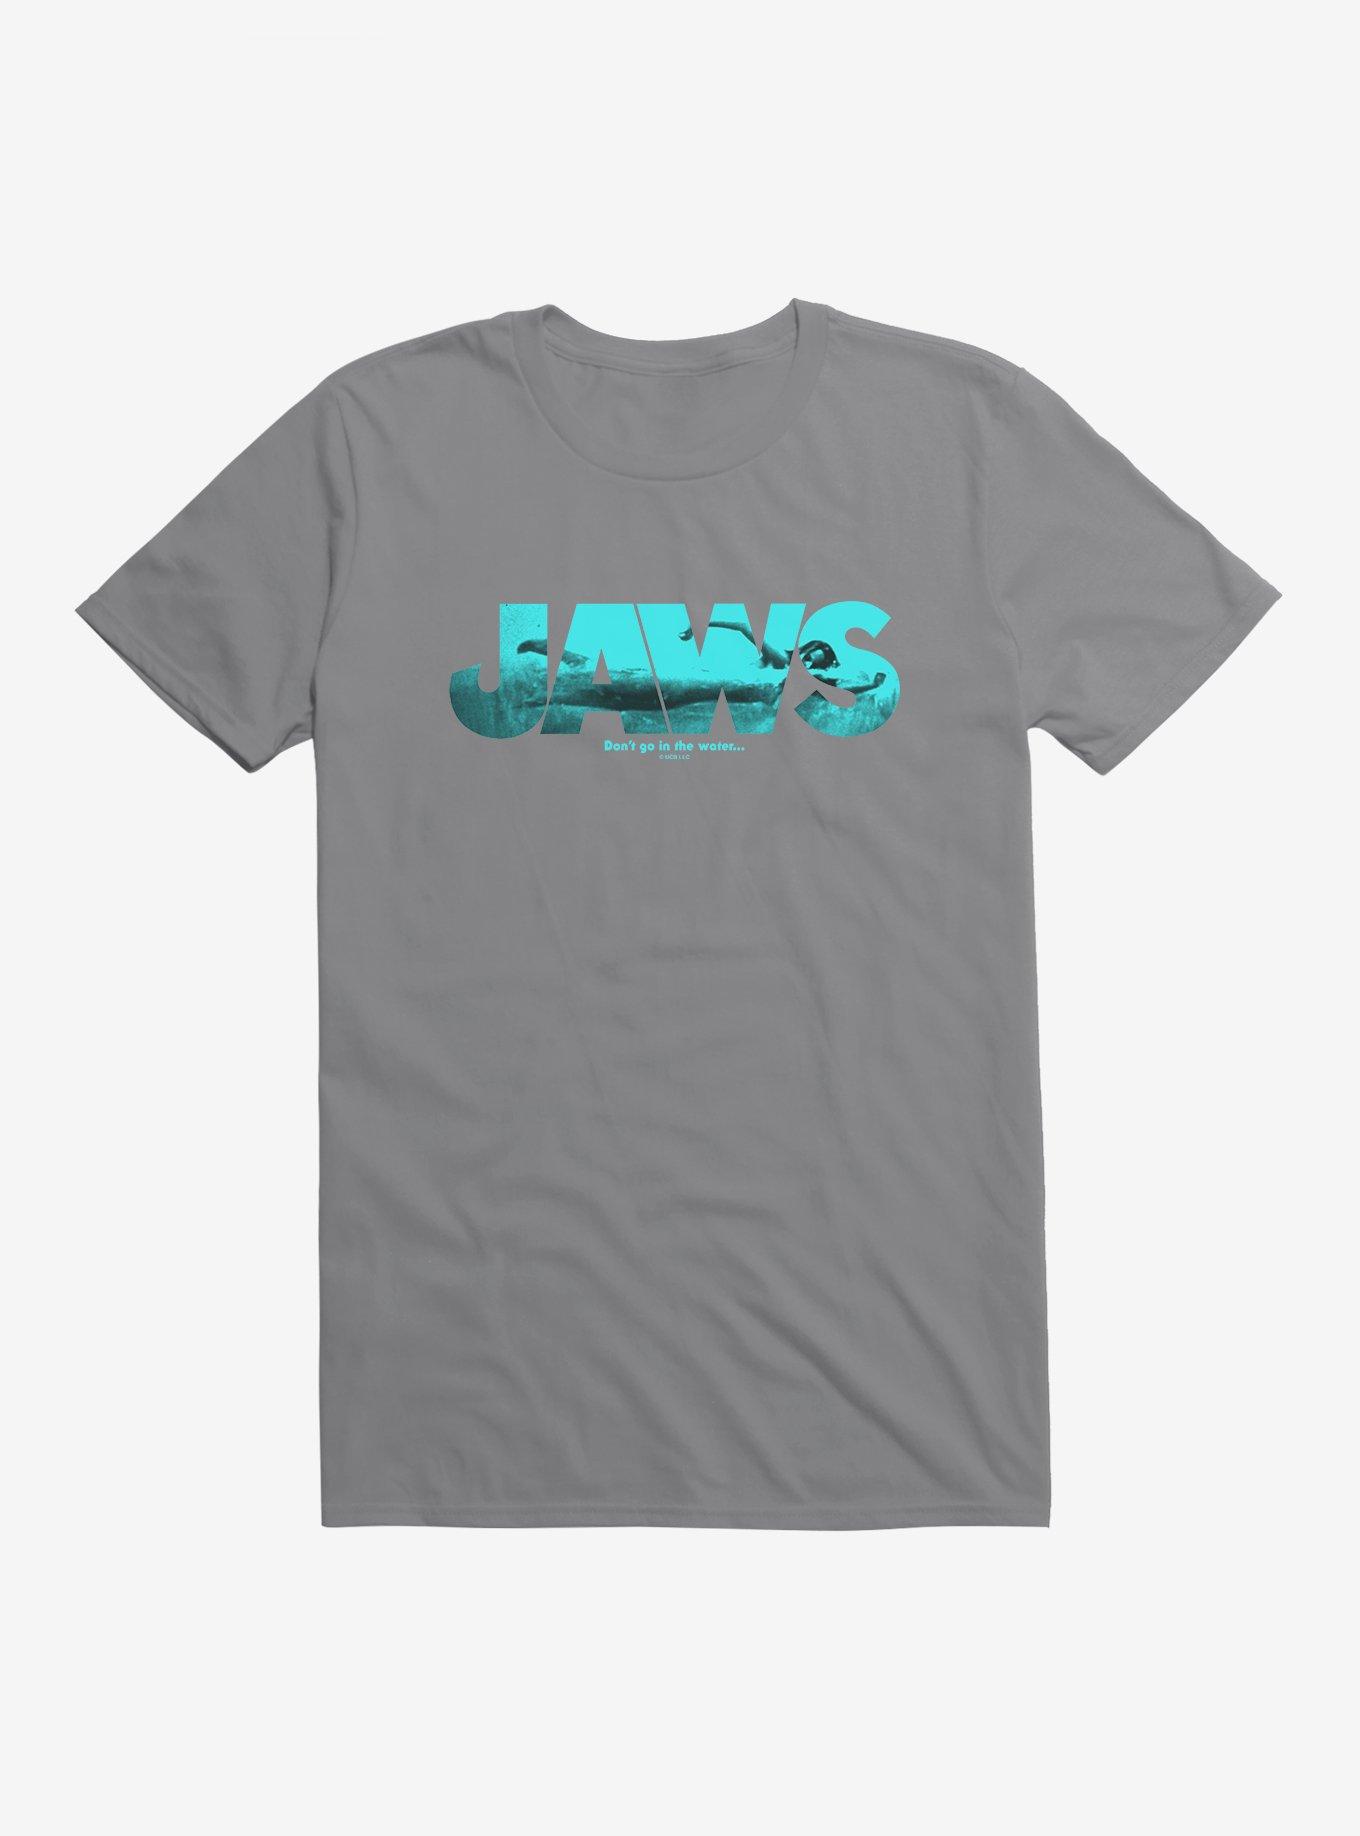 Jaws Script Ocean Imagery T-Shirt, , hi-res